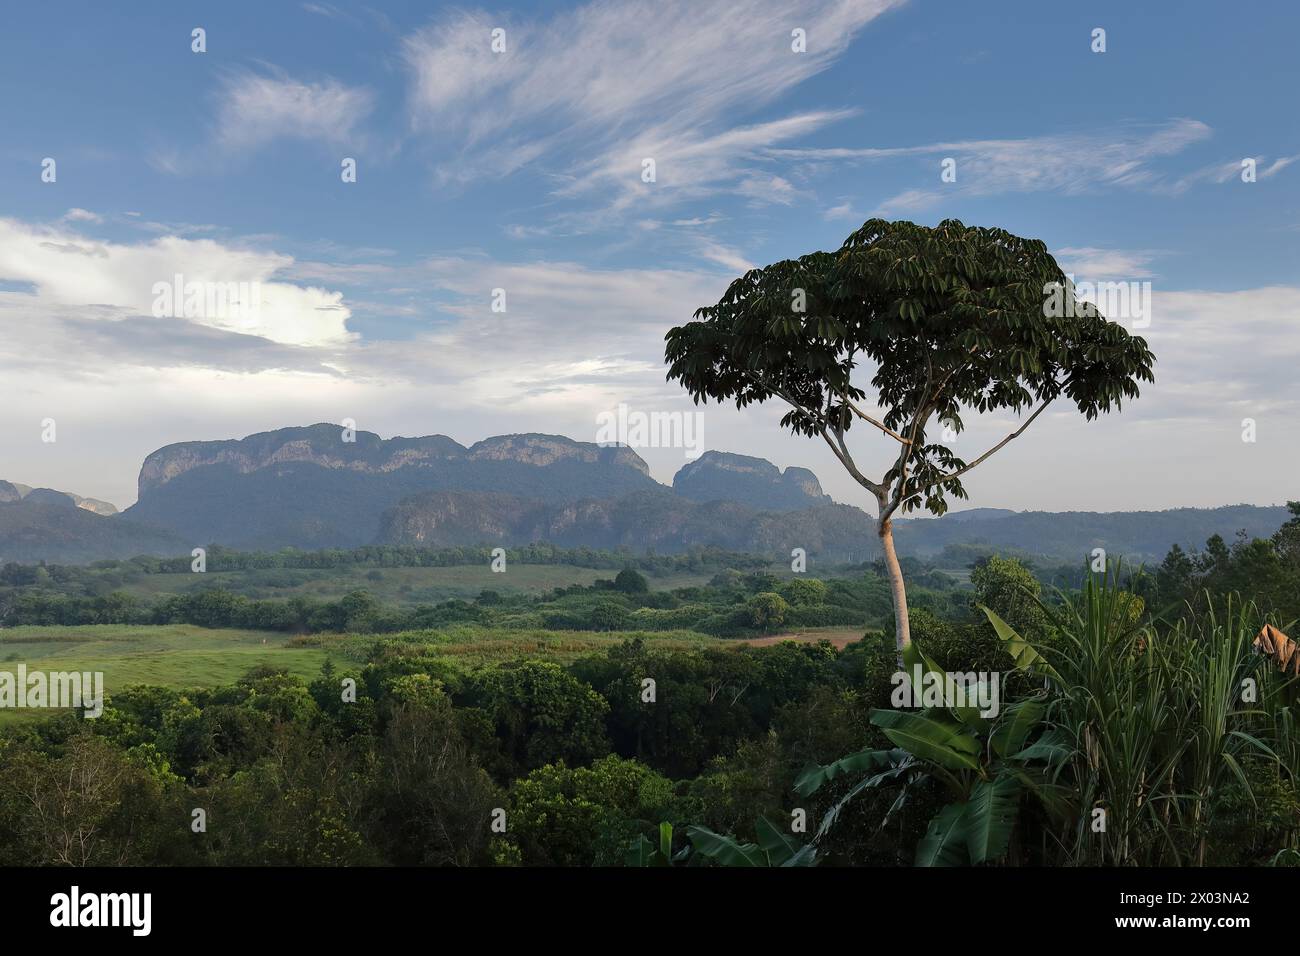 161 Ceibon, mogotes Robustiano -sinistra, destra- e la Esmeralda, sostenuto dalla Sierra de los Organos, tutti visti dalla Valle del Silencio. Viñales-Cuba. Foto Stock